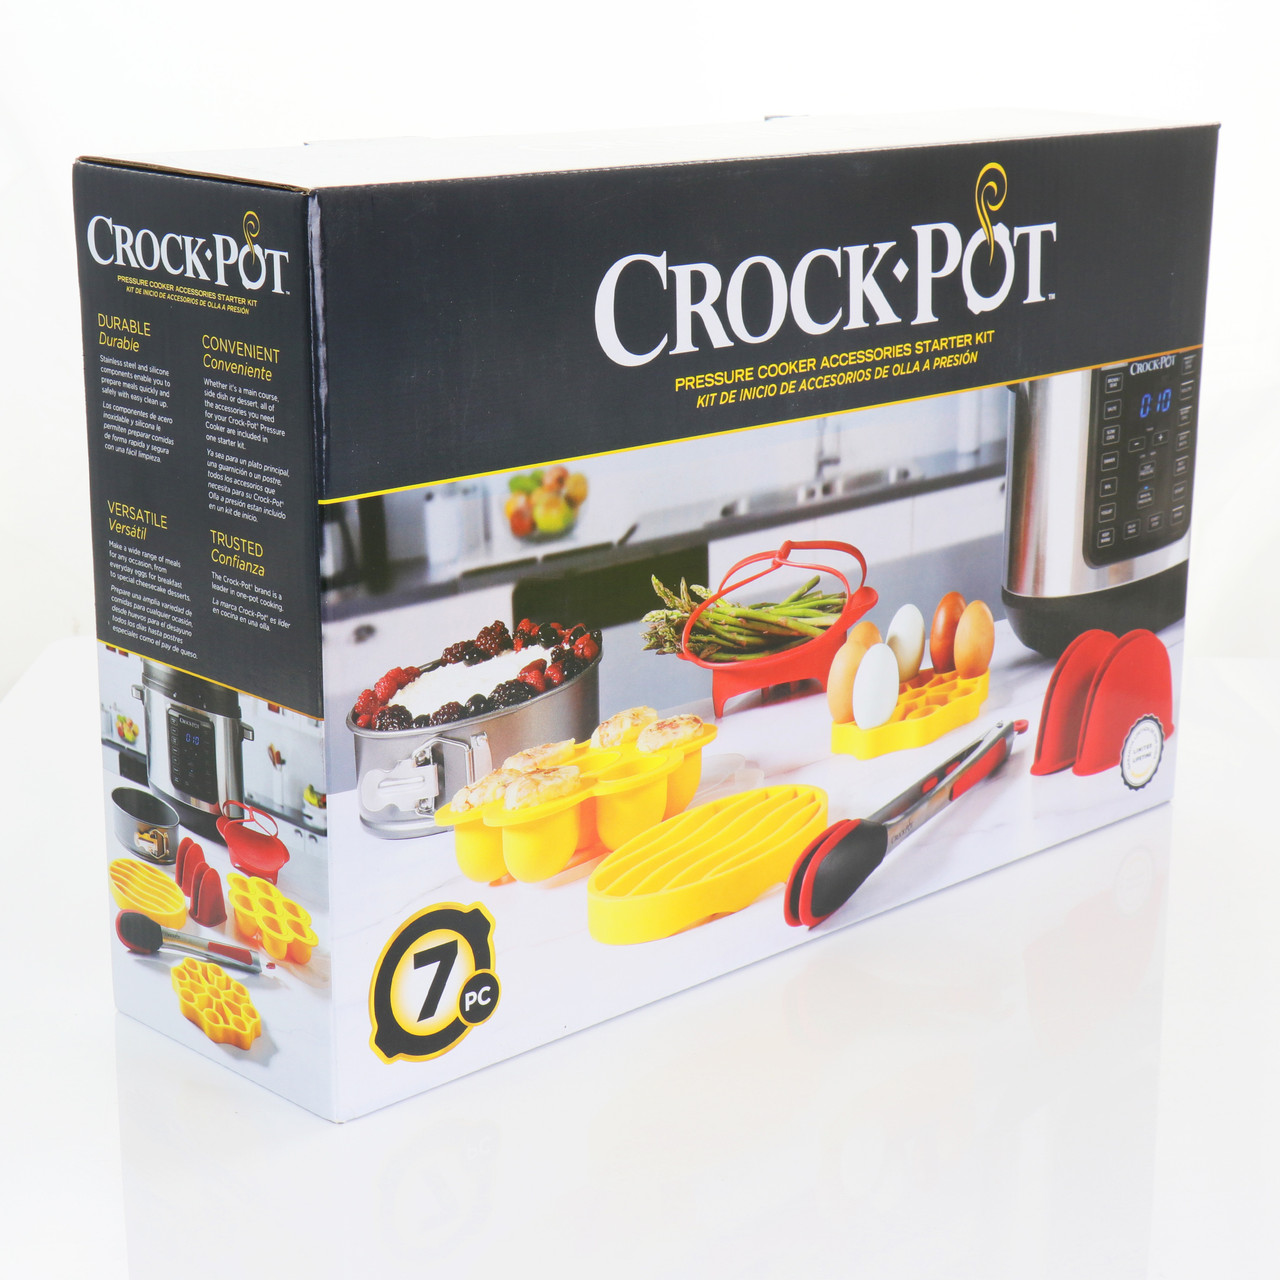 Crock-Pot 7-Piece Pressure Cooker Accessories Starter Kit